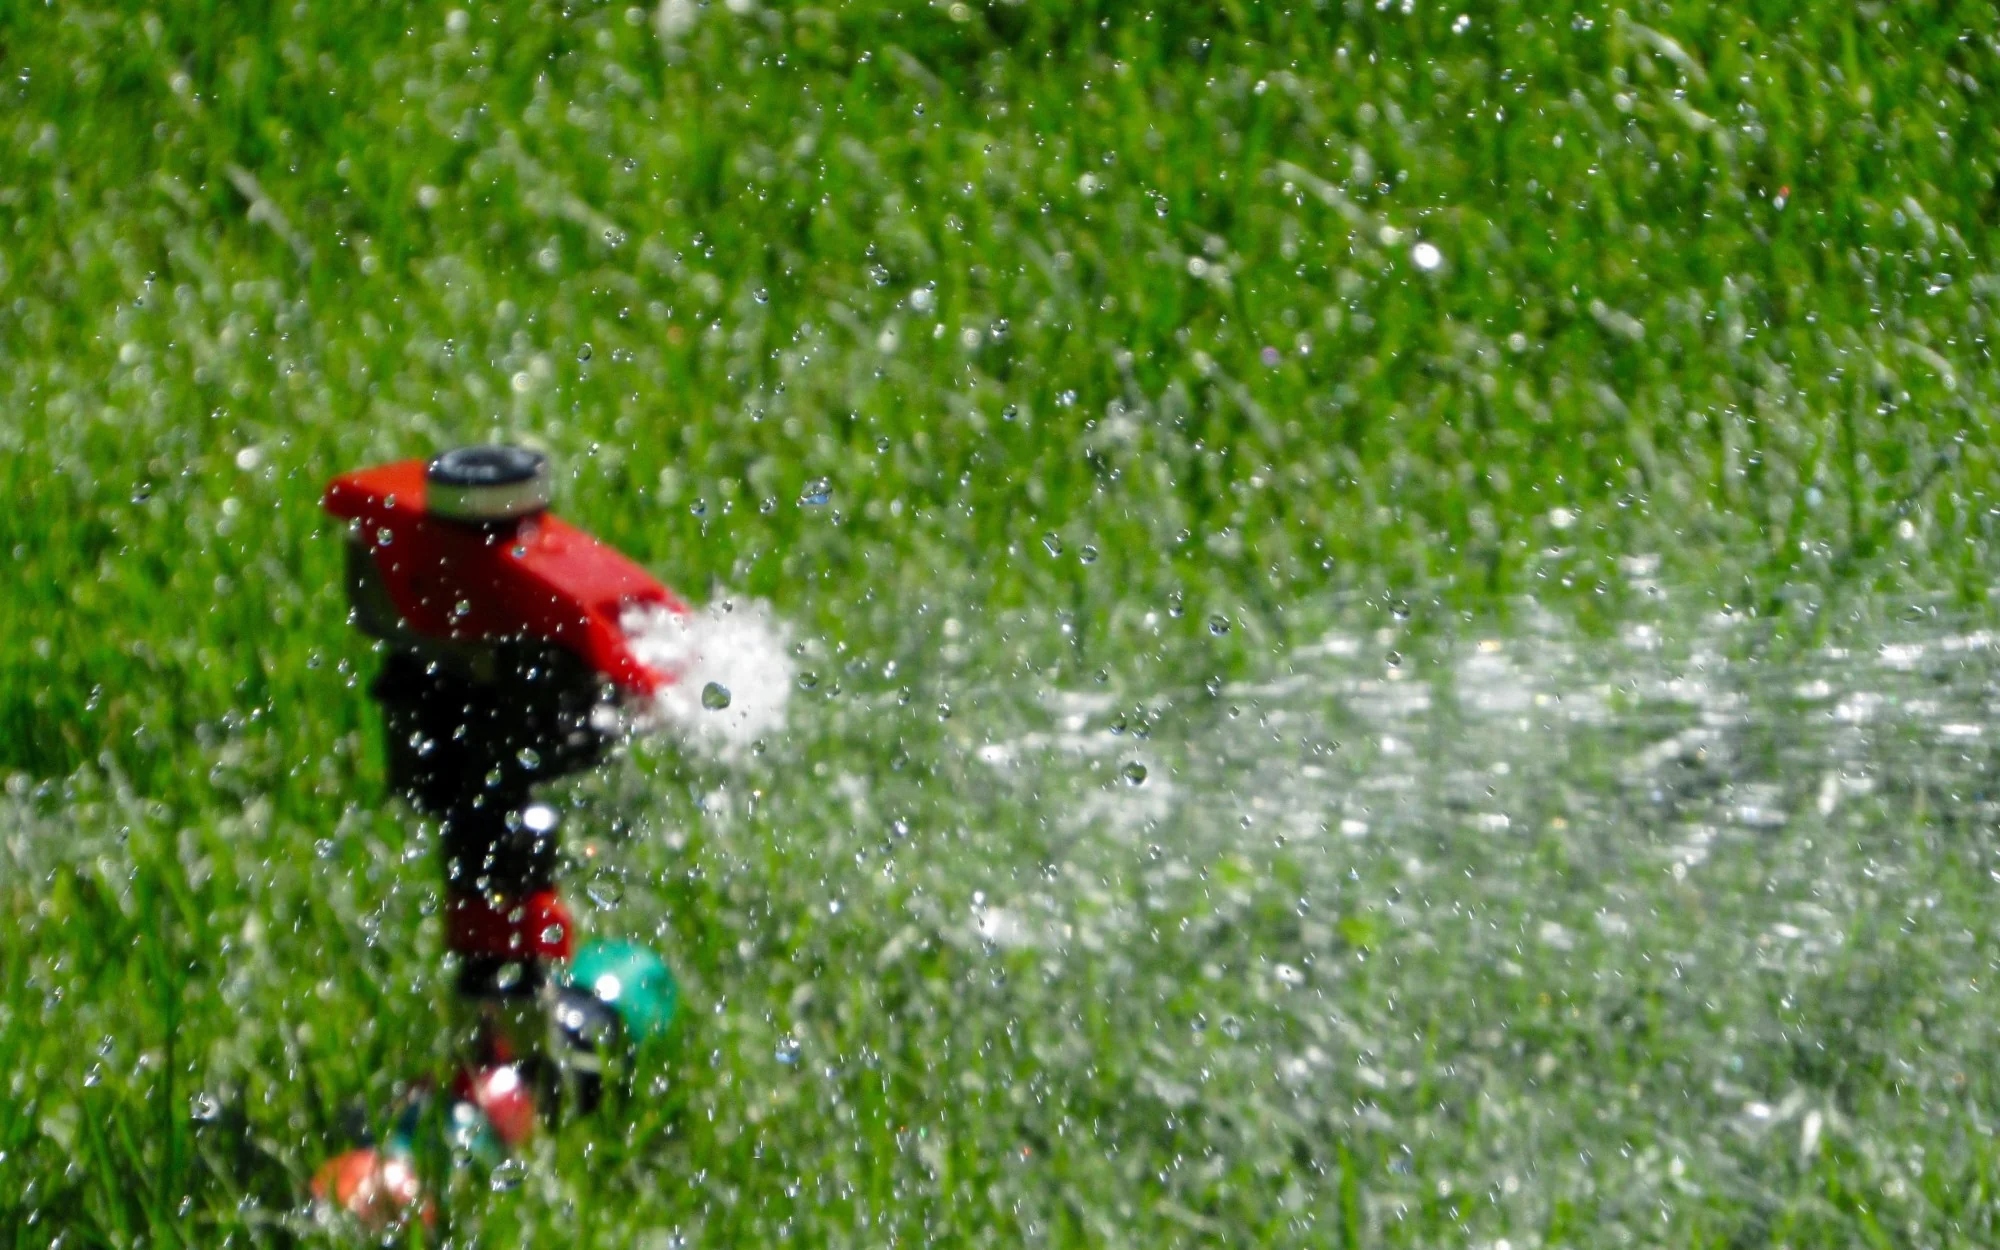 A sprinkler spraying water on grass